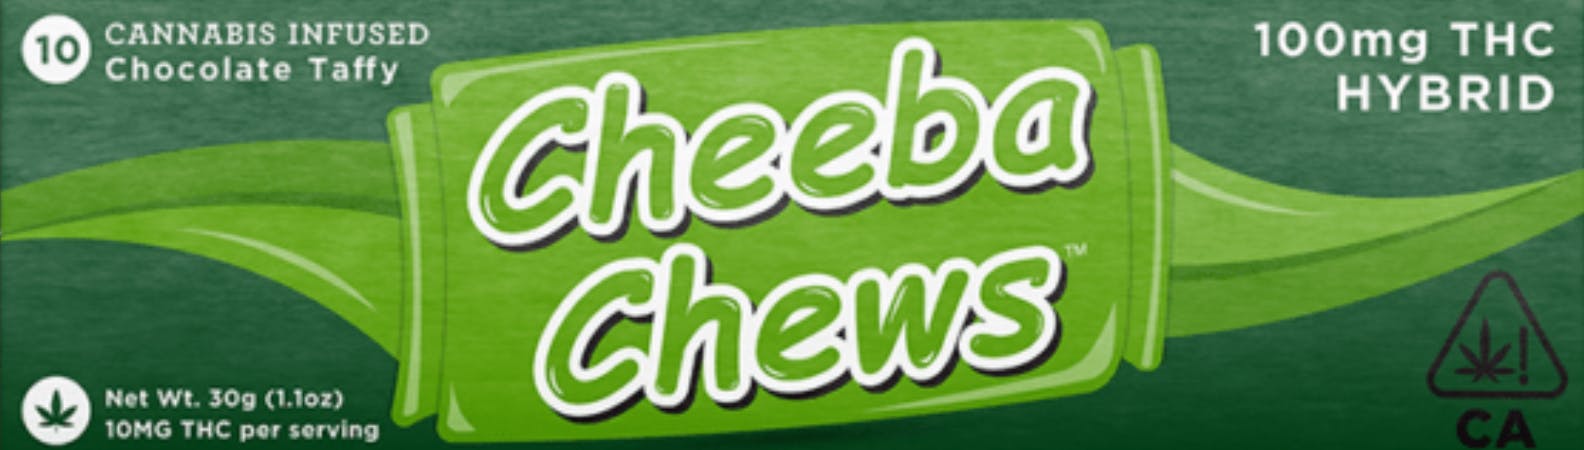 Cheeba Chews Hybrid Chocolate Taffy 100mg